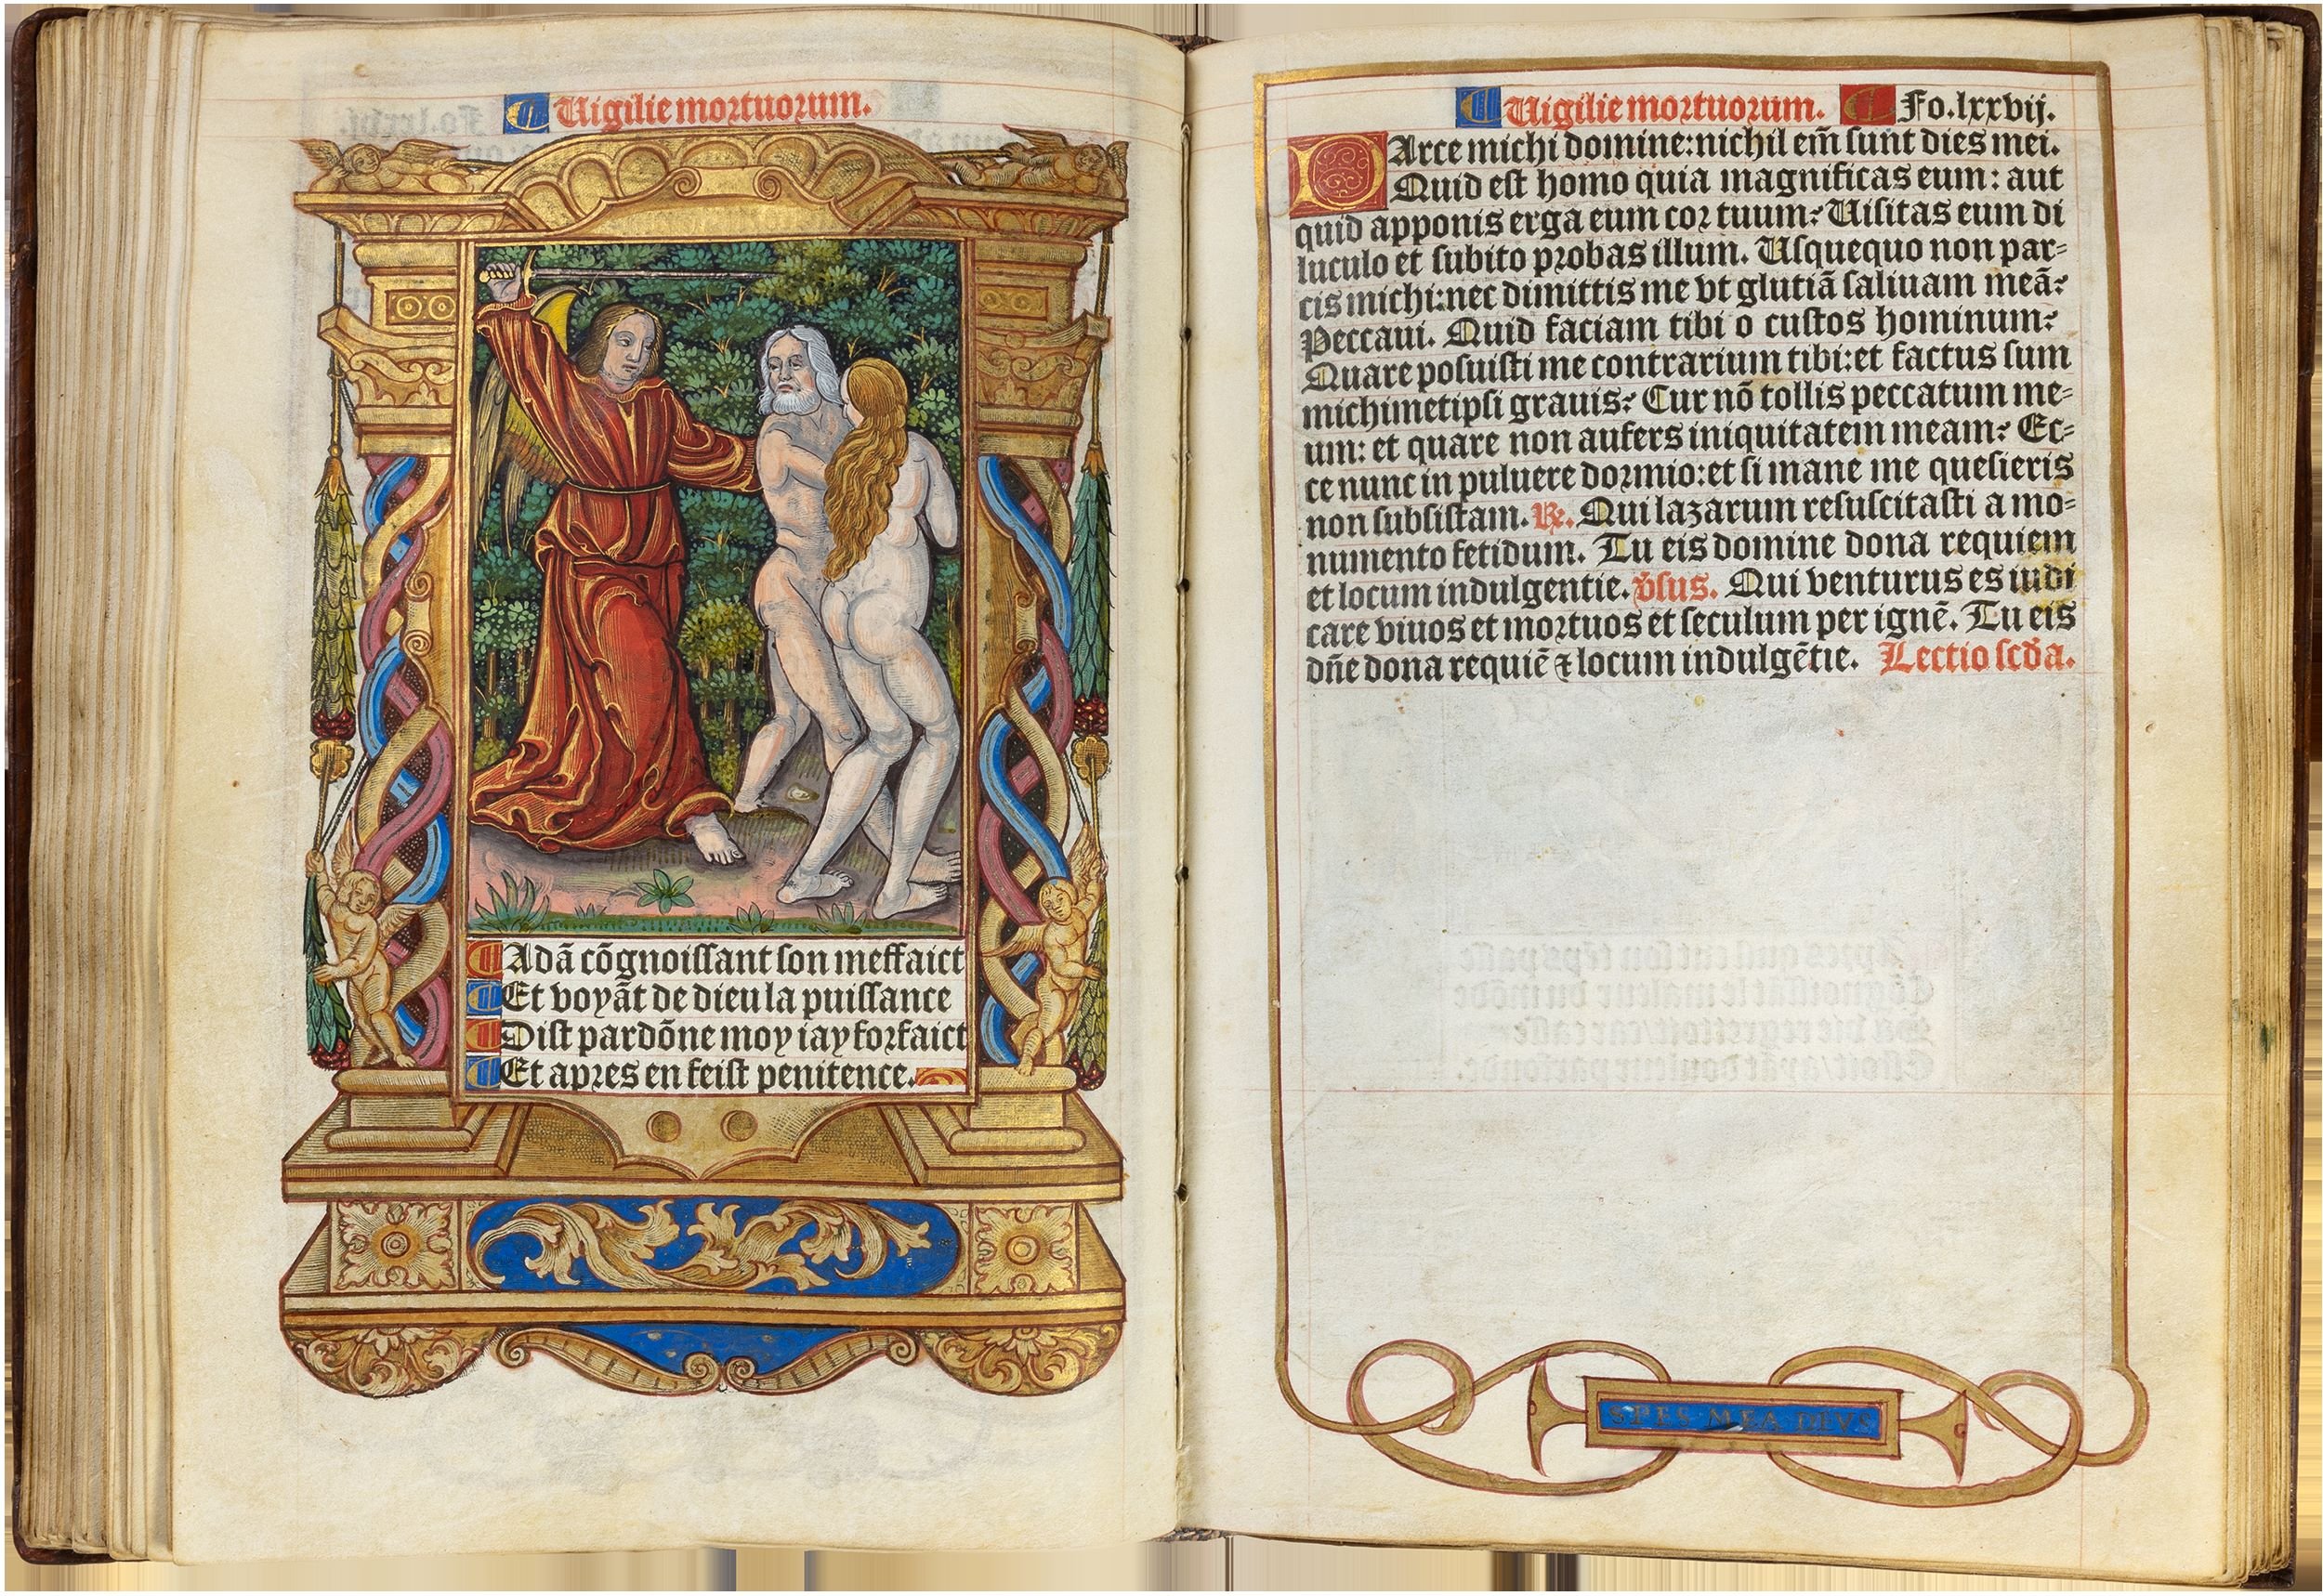 Printed-Book-of-hours-Anne-de-Montmorency-16-february-1523-kerver-yolande-bonhomme-illuminated-vellum-copy-78neu.jpg